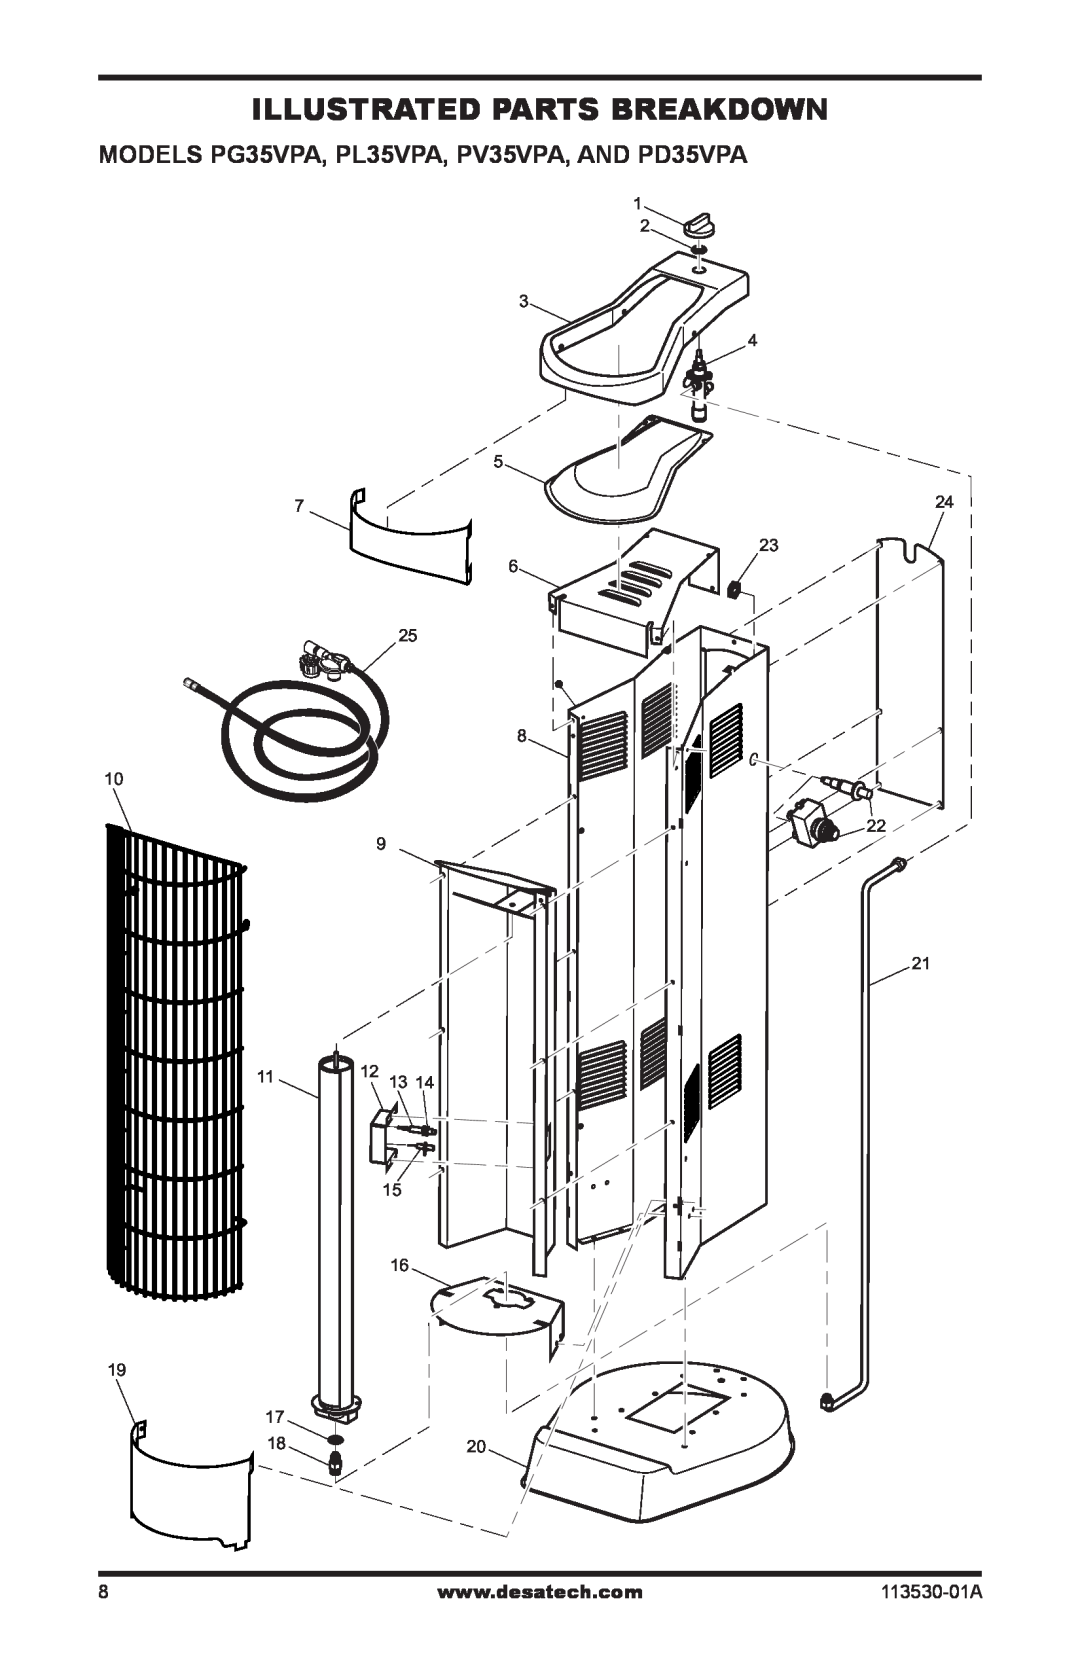 Desa owner manual Illustrated Parts Breakdown, MODELS PG35VPA, PL35VPA, PV35VPA, AND PD35VPA, 113530-01A 